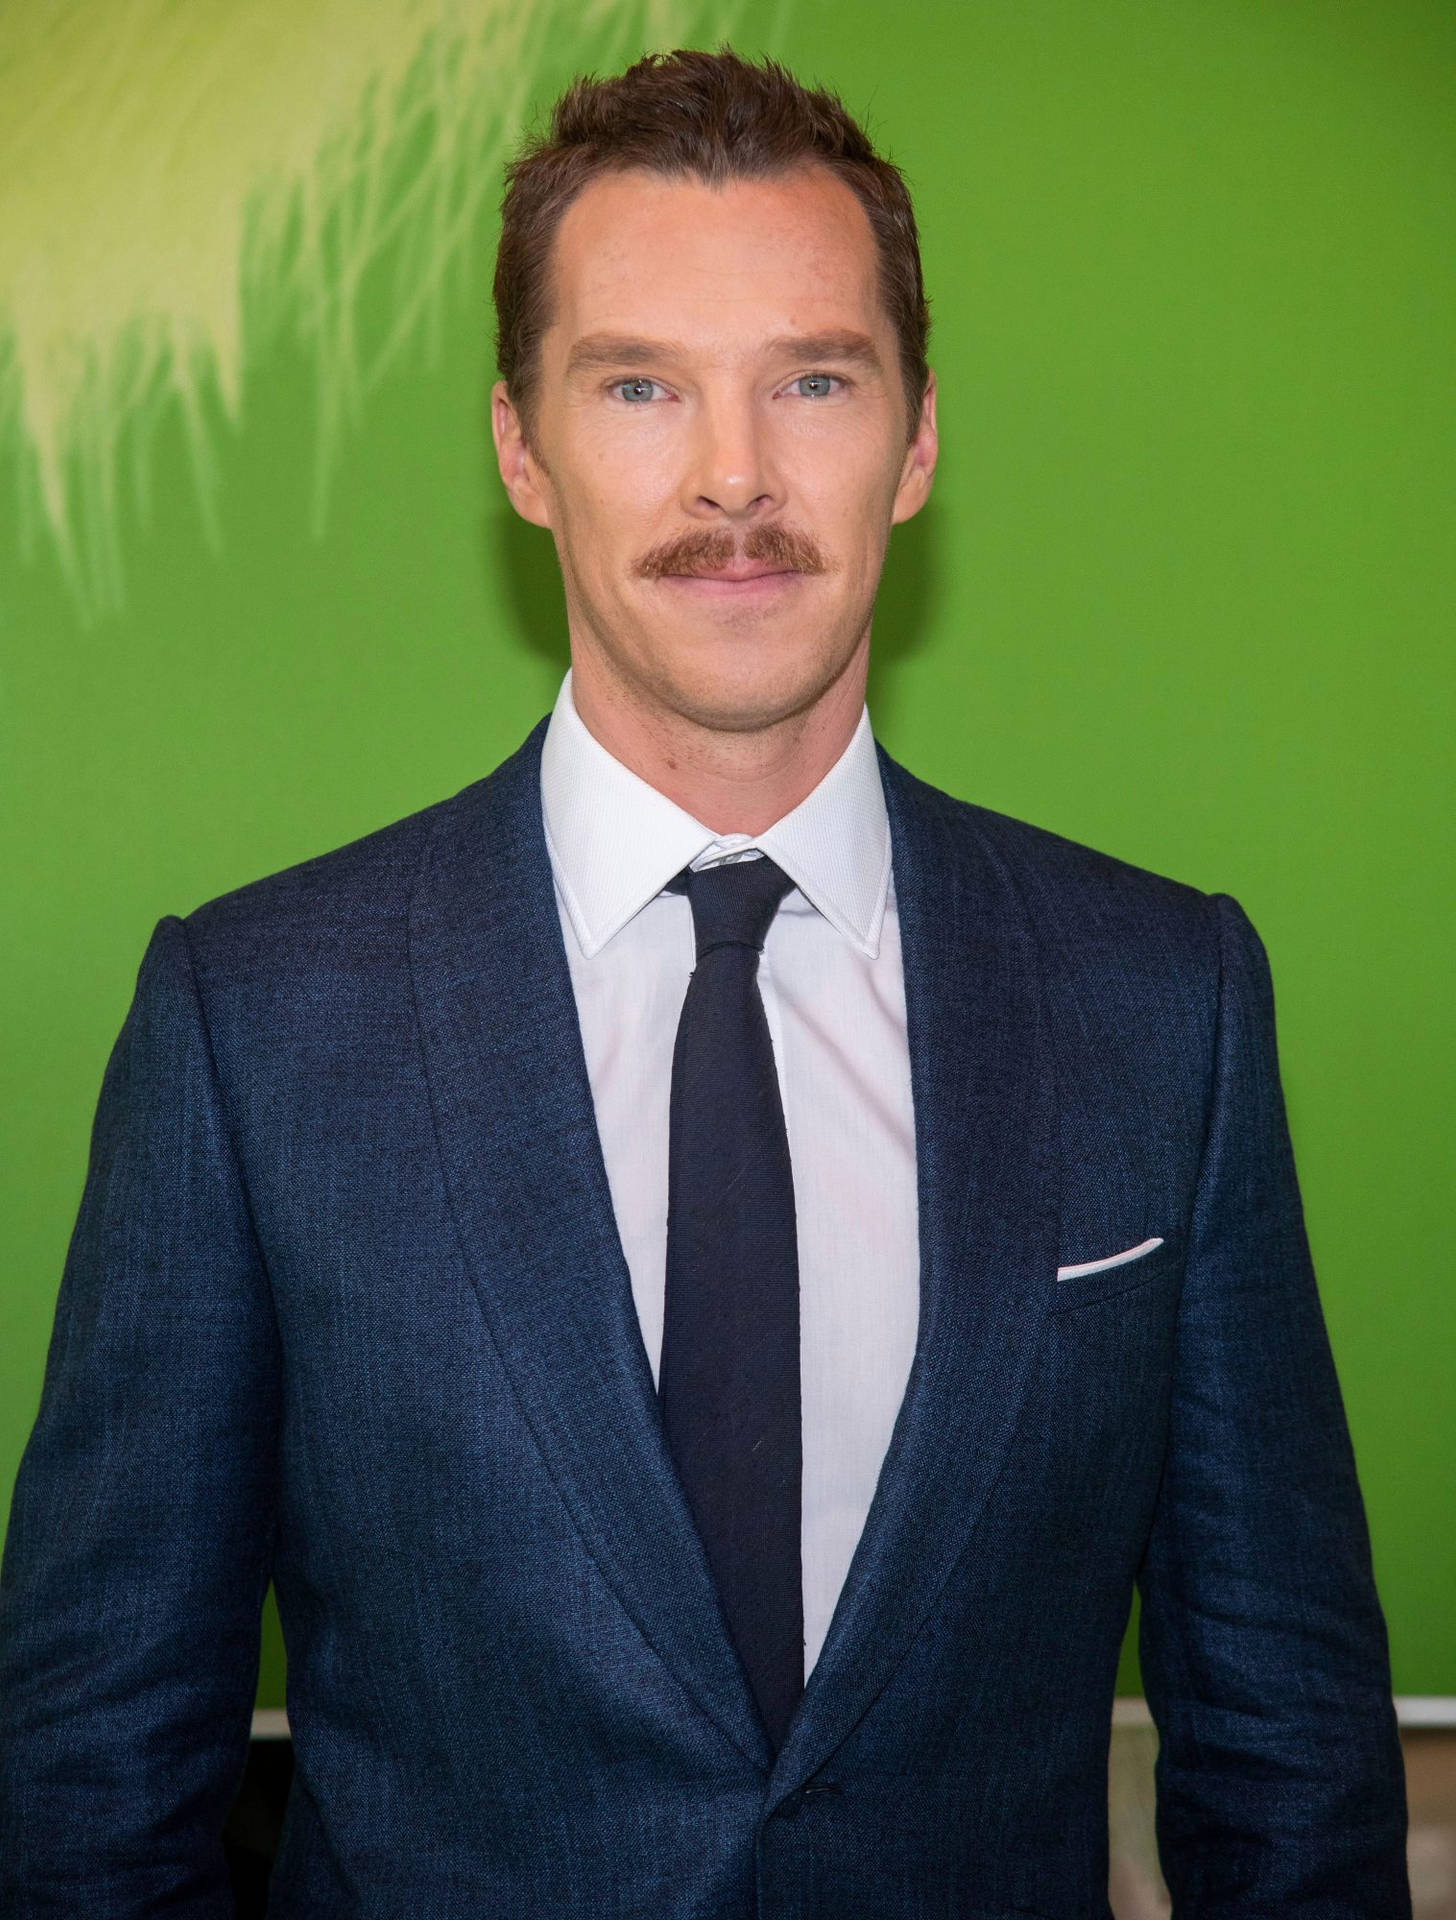 Benedict Cumberbatch With Mustache Picture